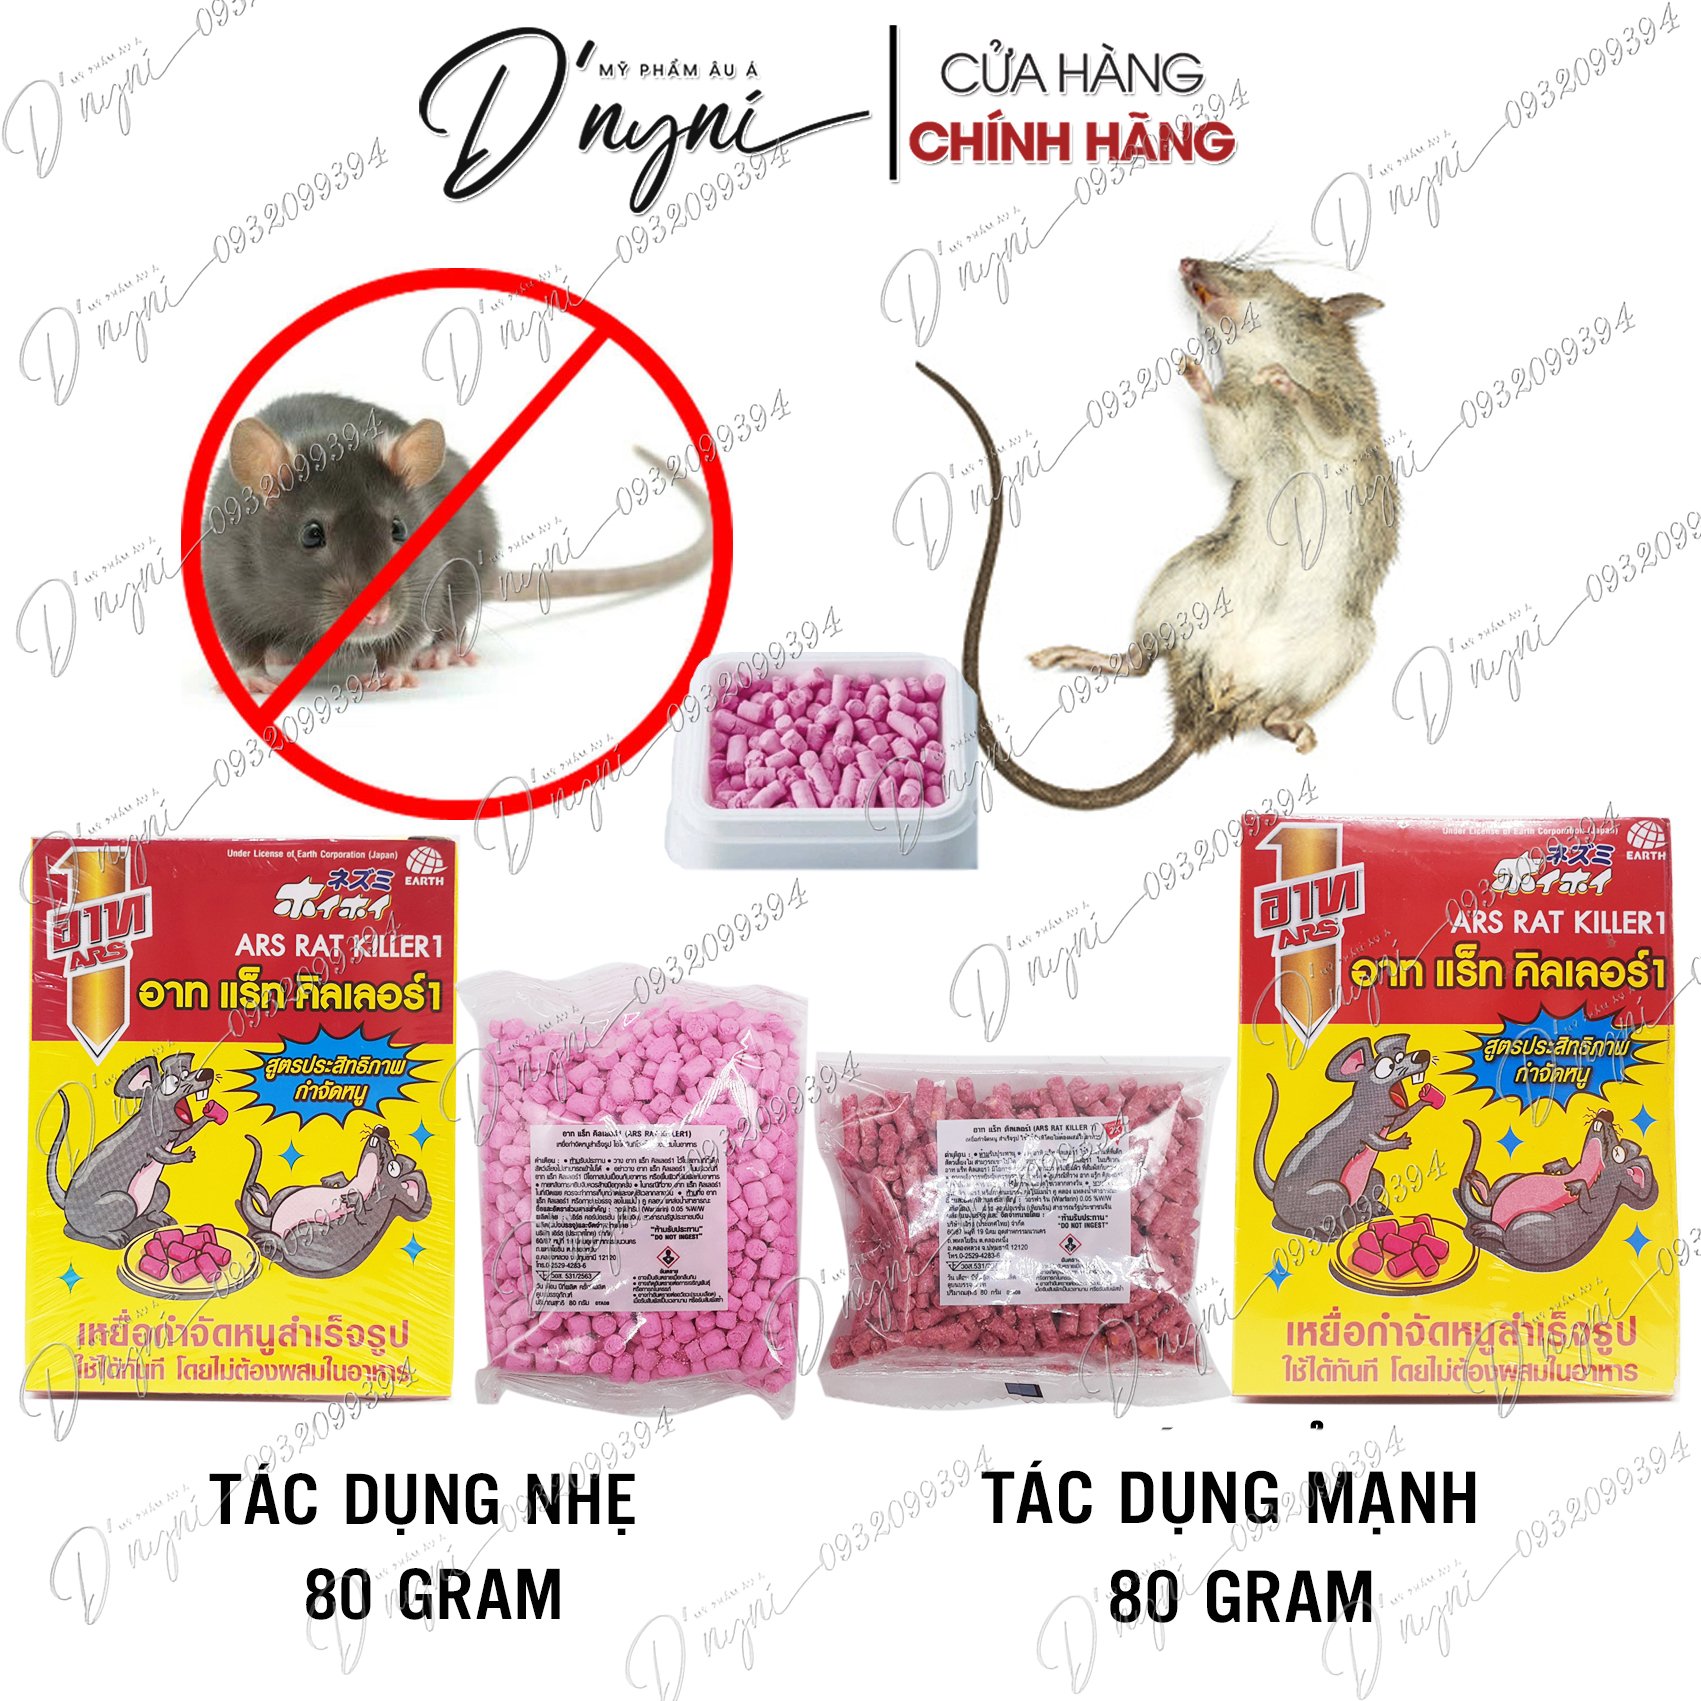 Thailand Ars rat killer 80g